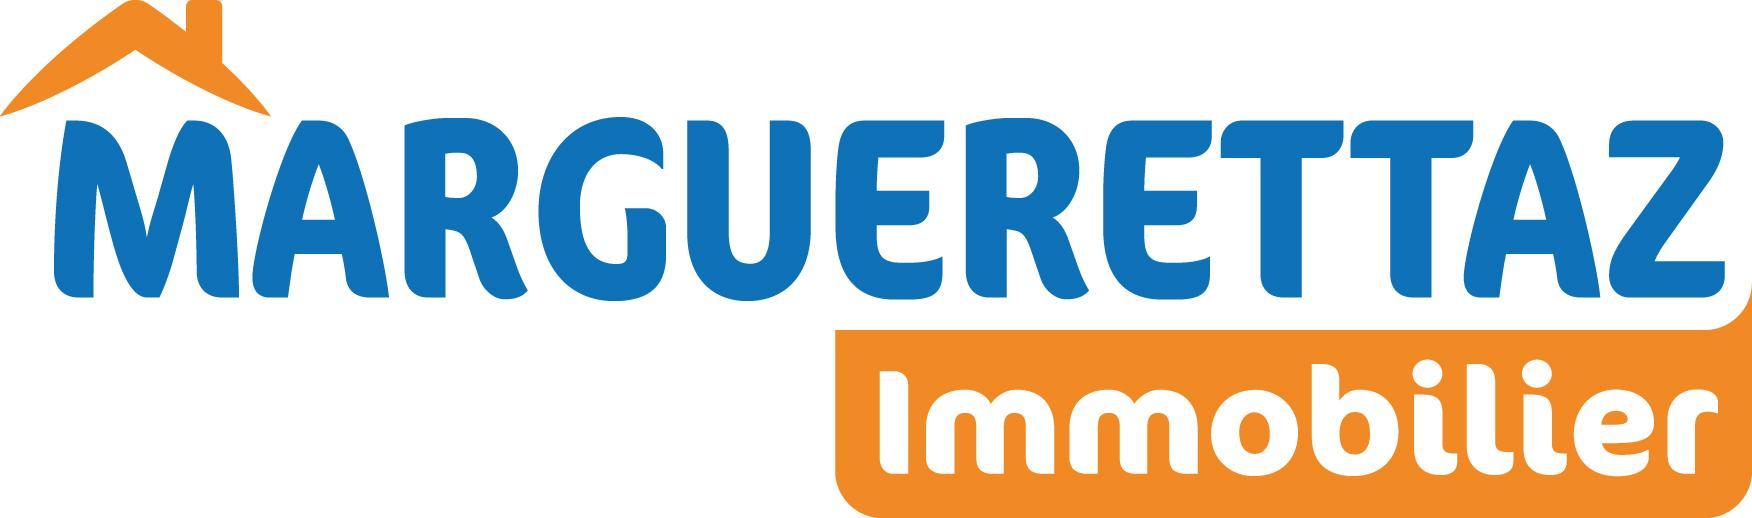 Logo Marguerettaz Immobilier